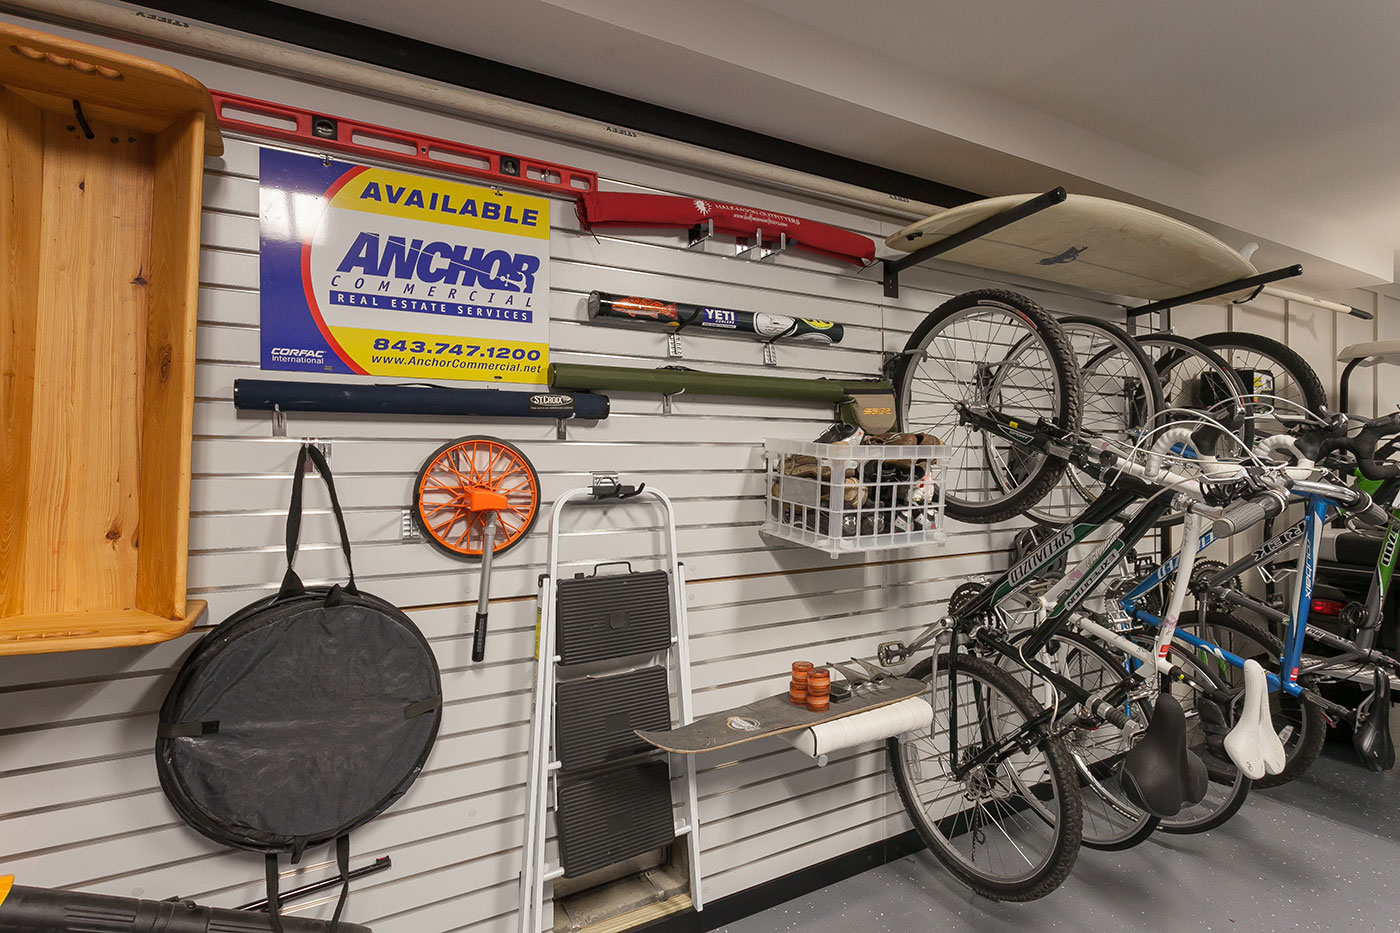 omni board with bikes and sport racks